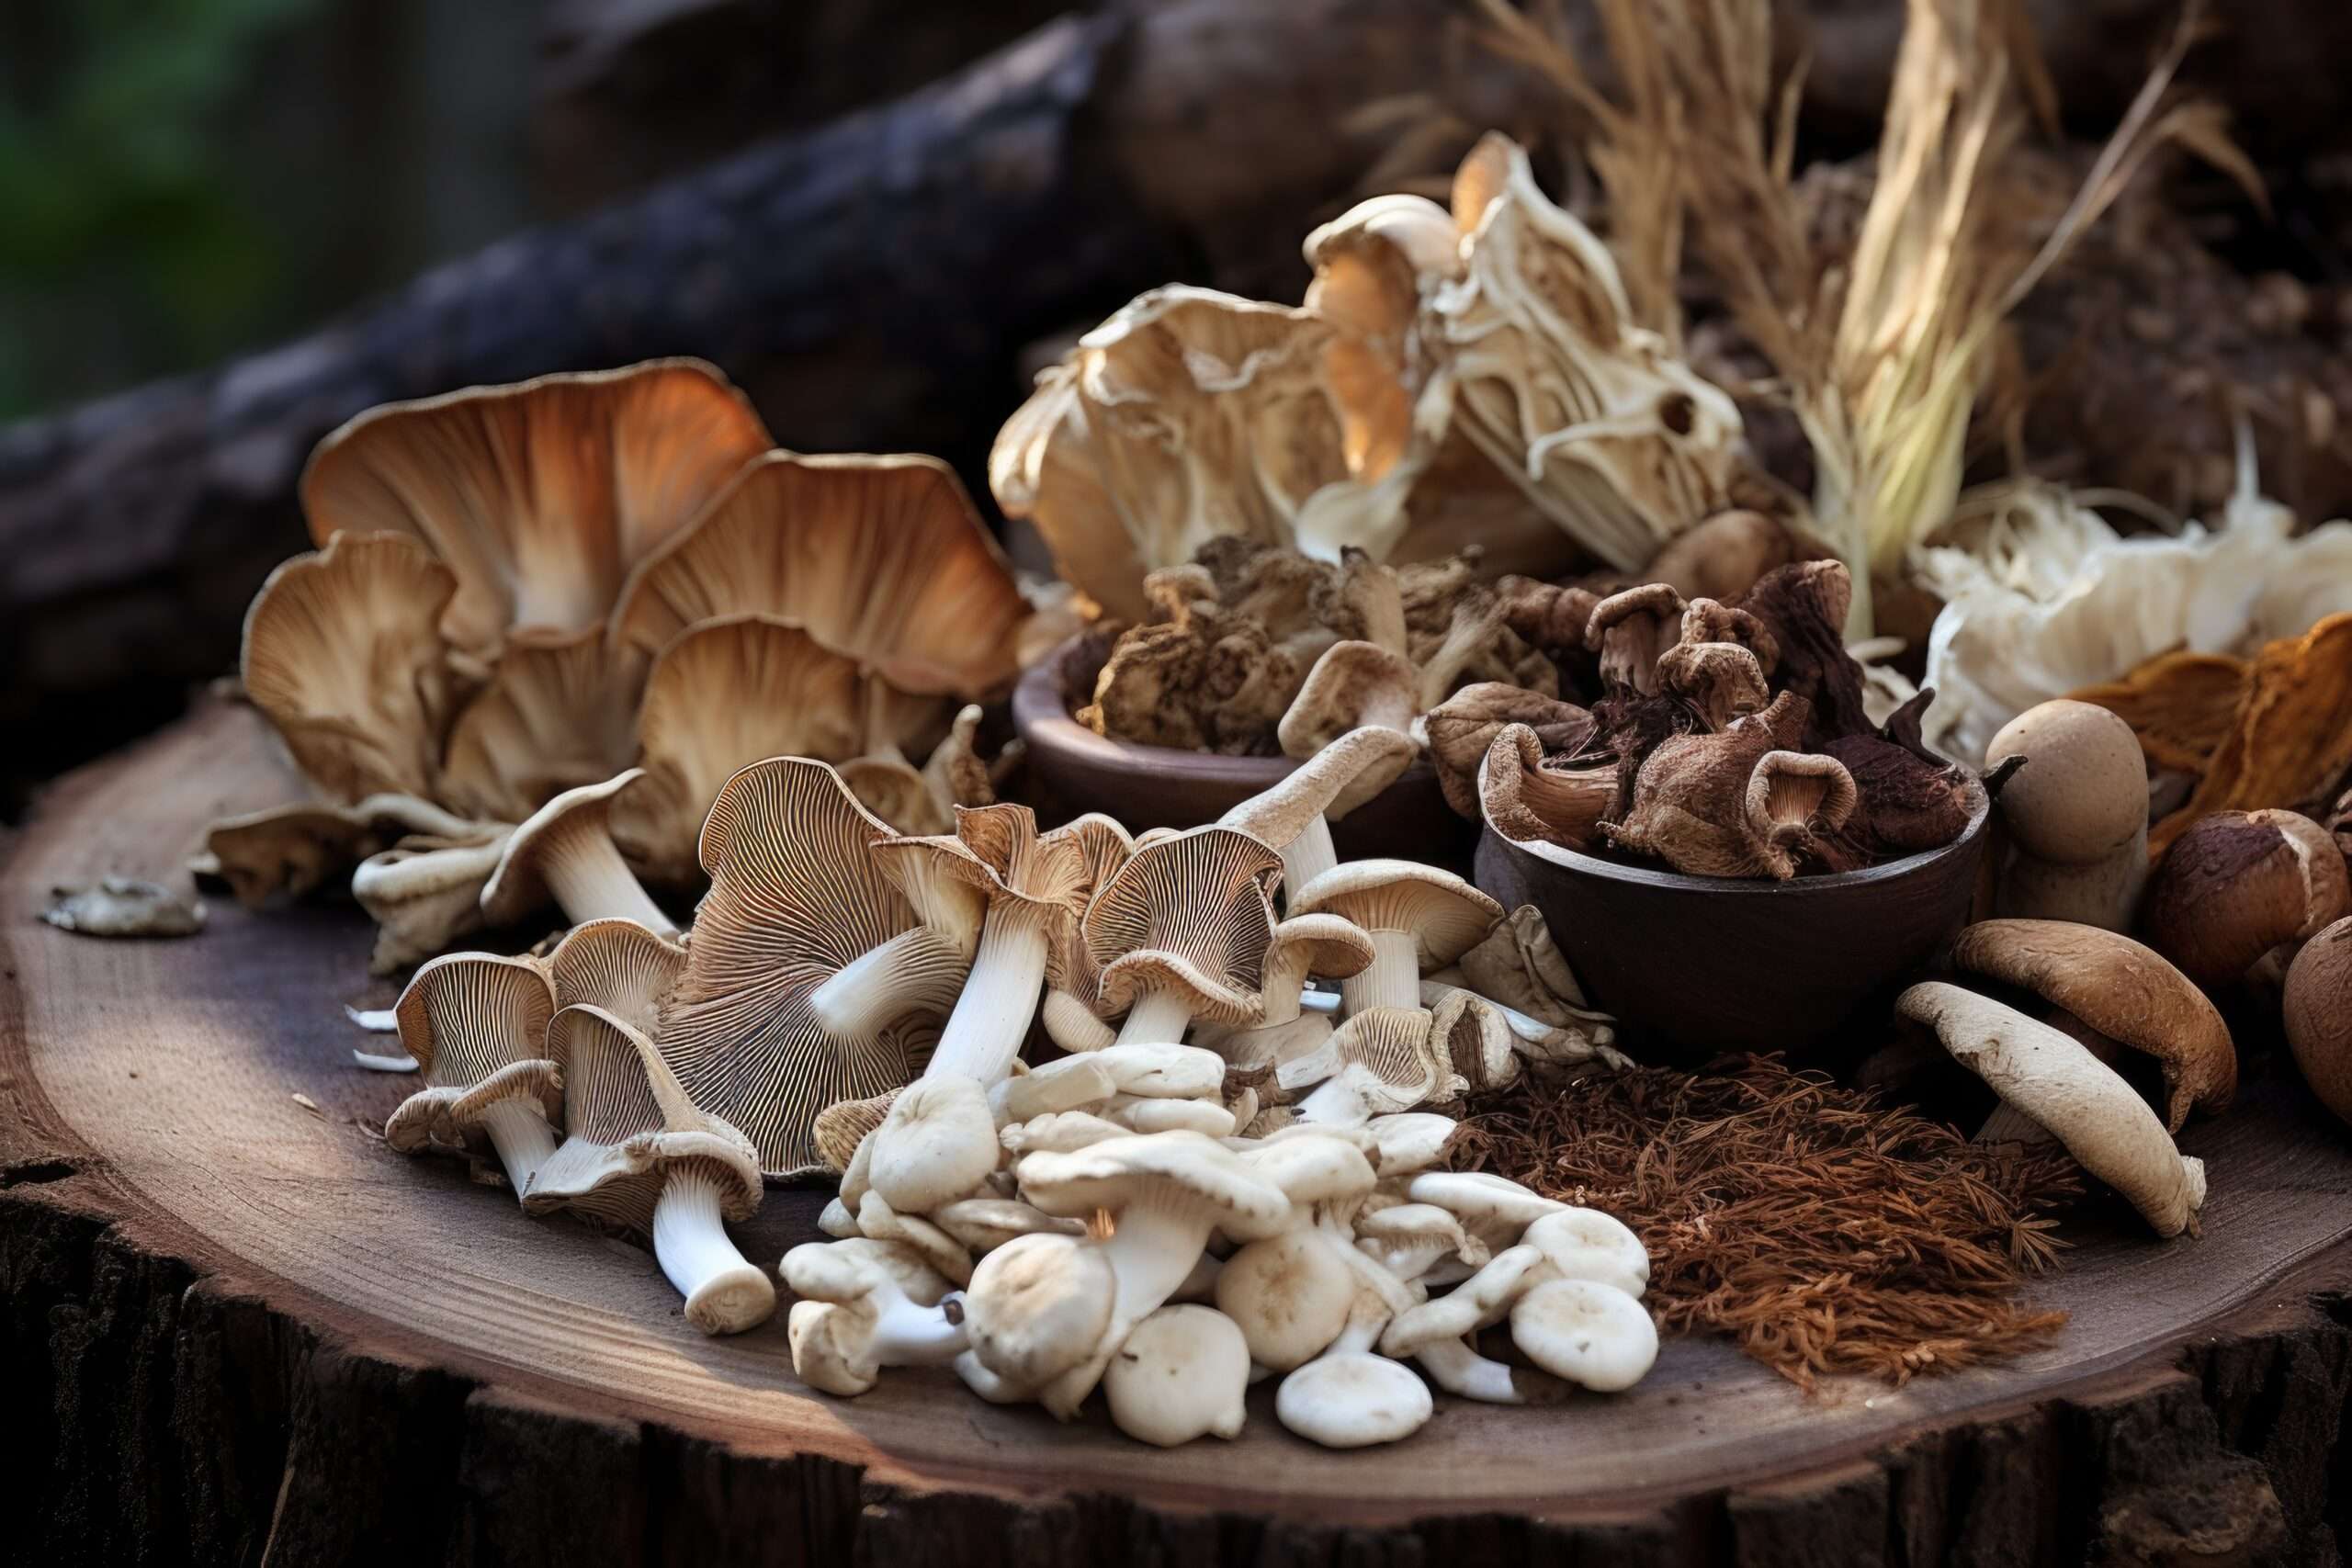 Assorted dried medicinal mushrooms arranged on a tree stump platter